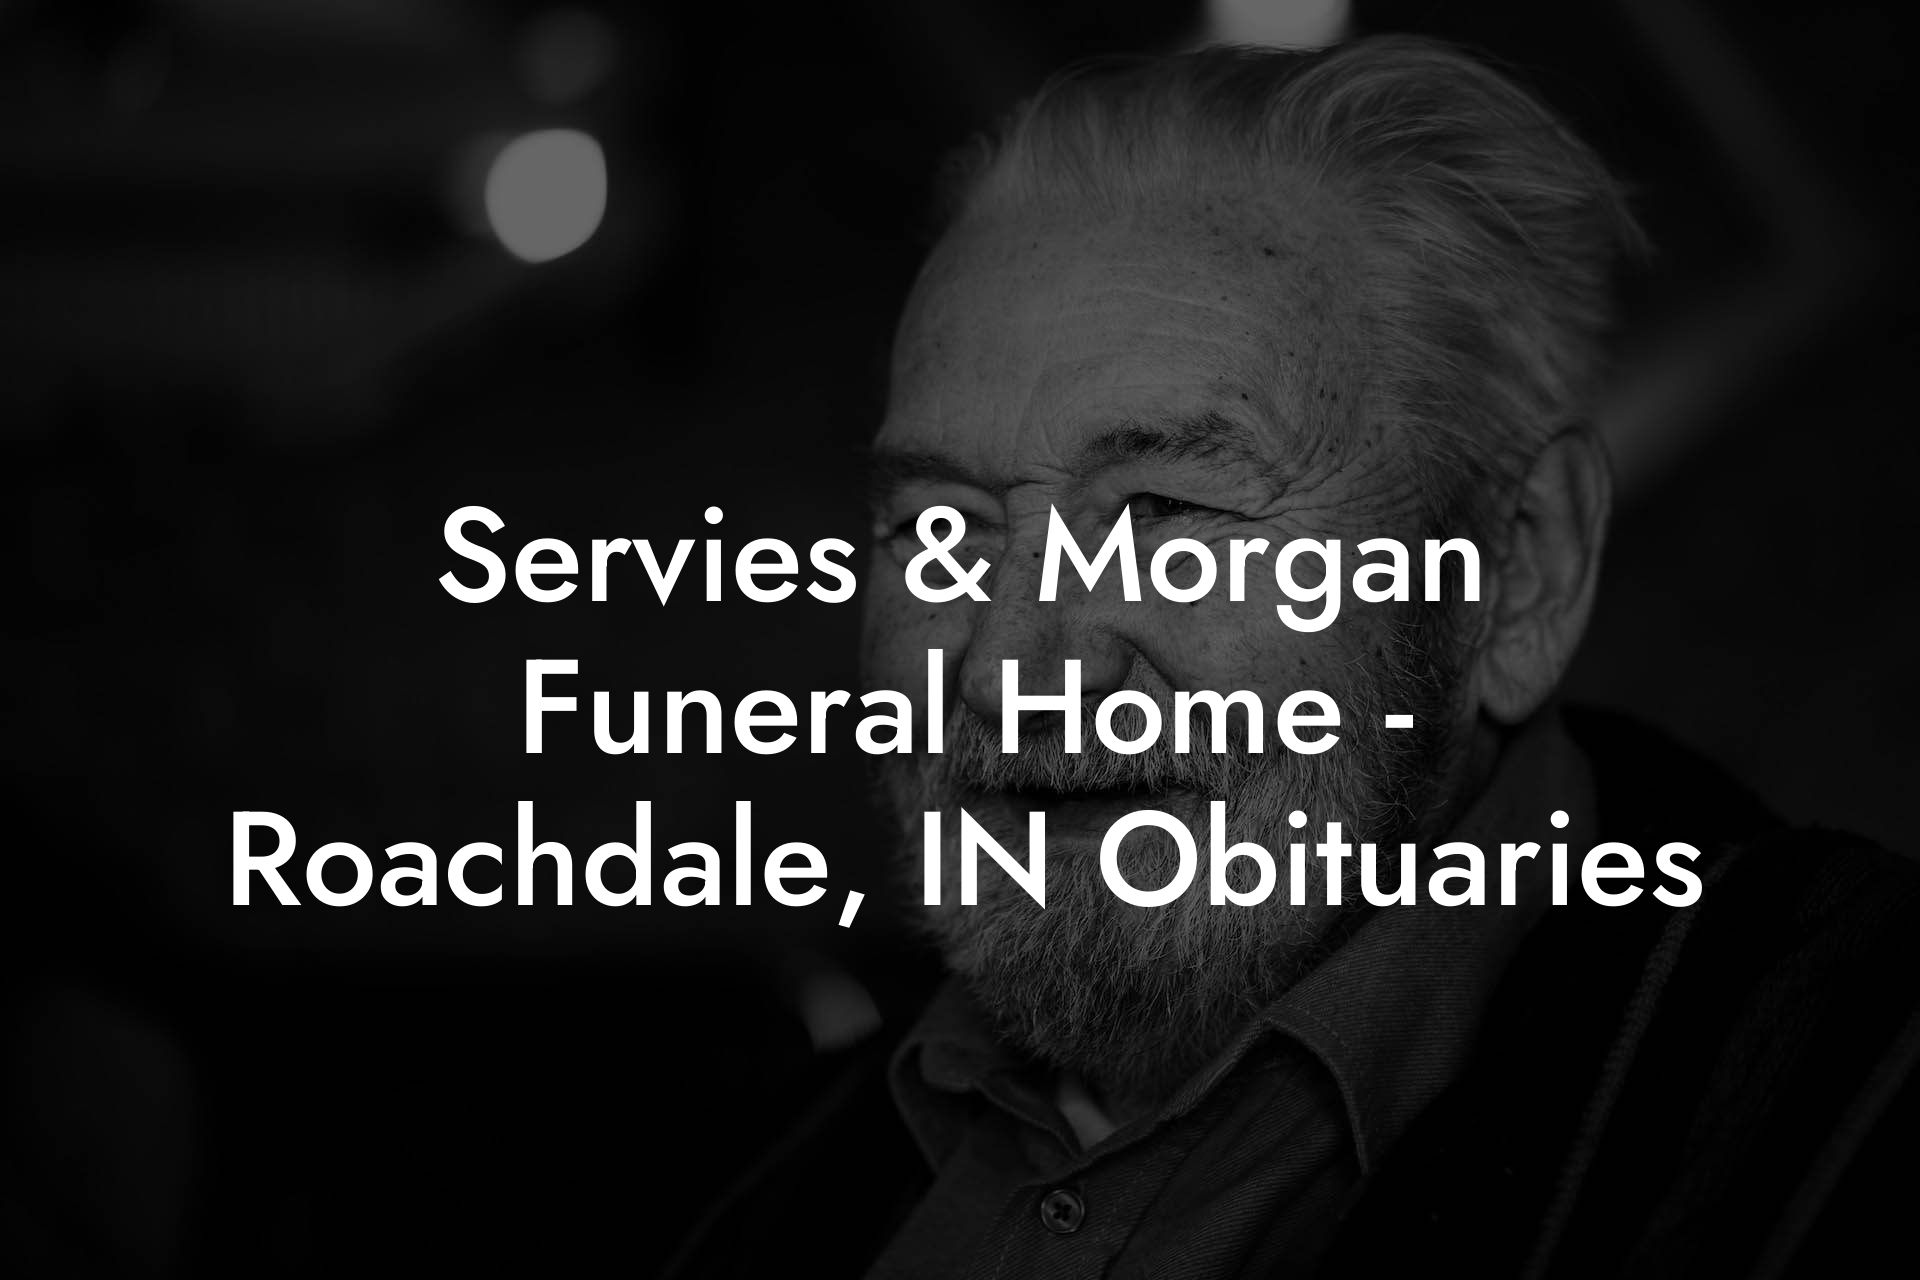 Servies & Morgan Funeral Home - Roachdale, IN Obituaries